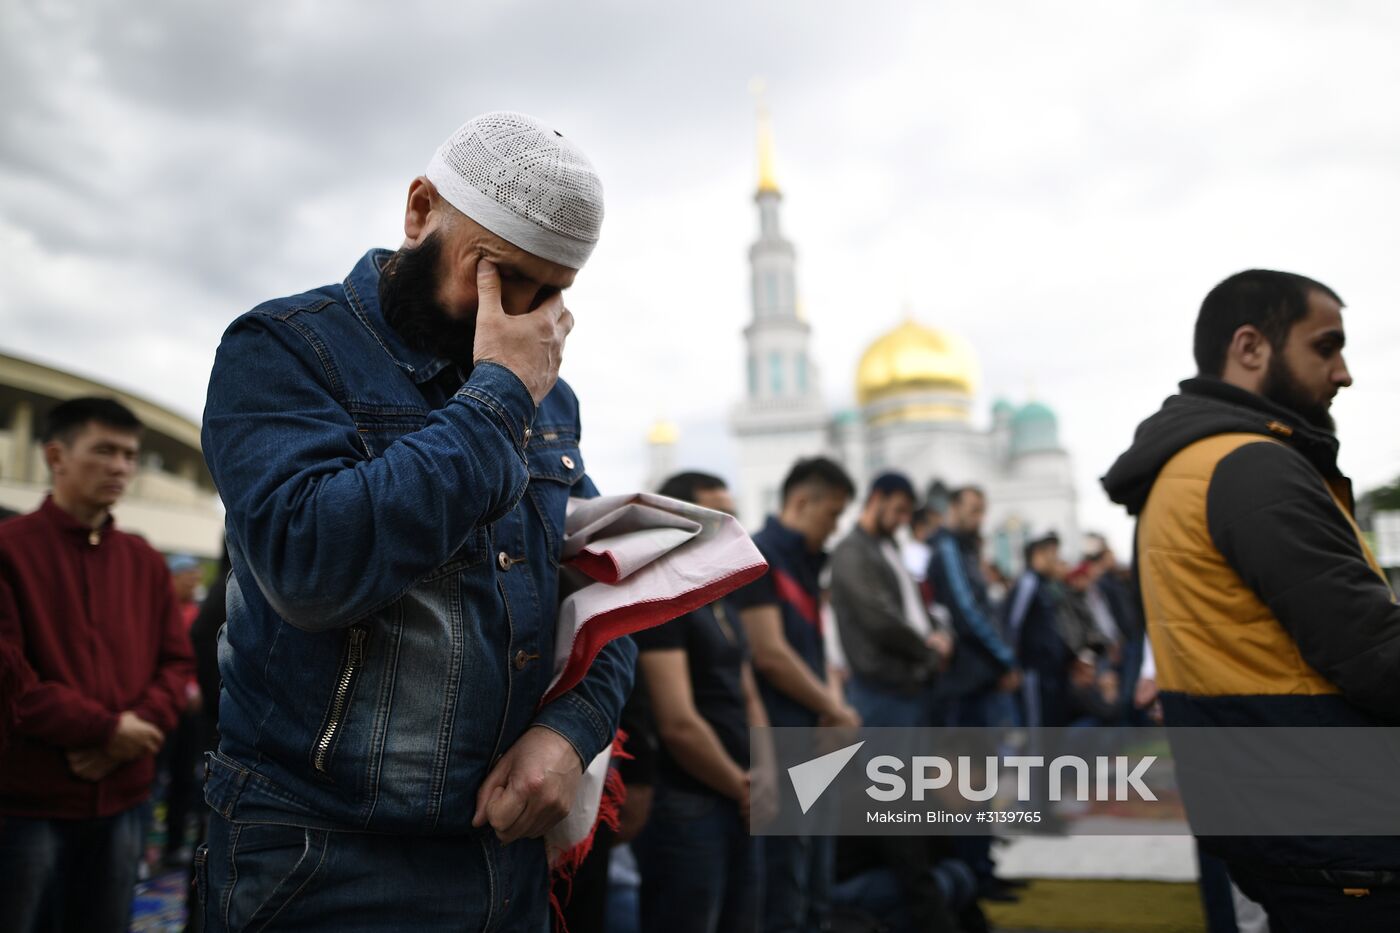 Eid al-Fitr holiday celebrated in Russia